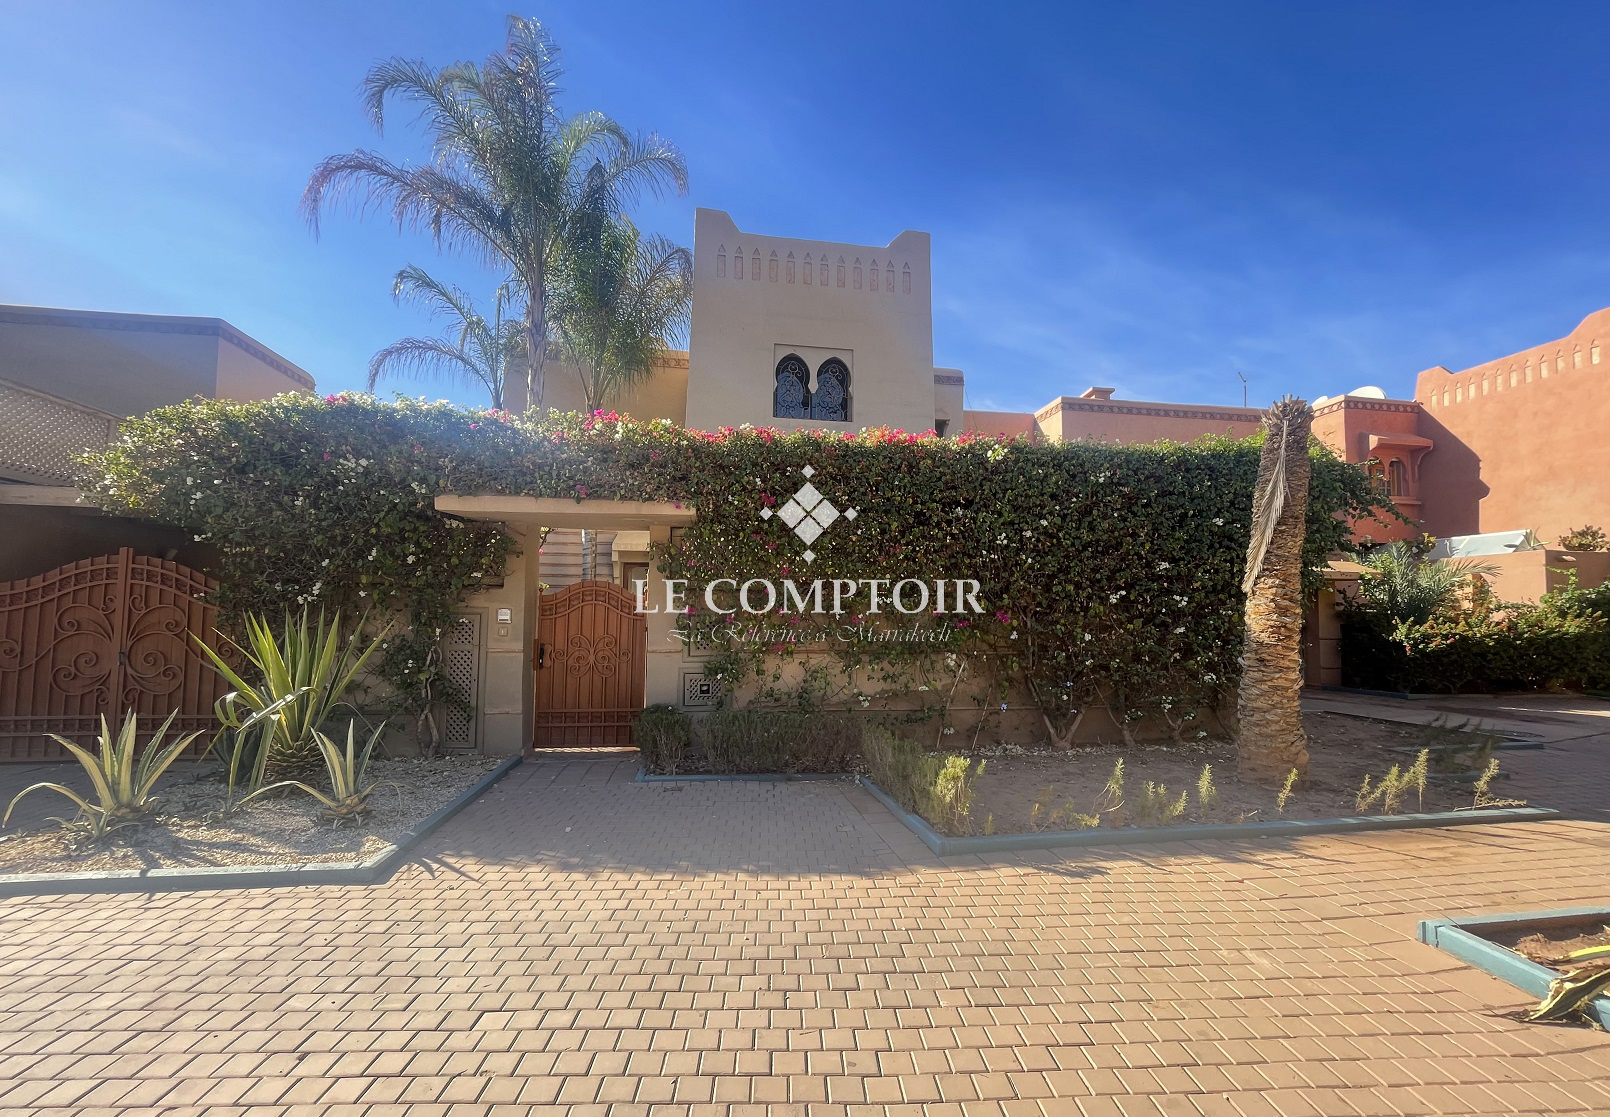 Le Comptoir Immobilier Agence Immobiliere Marrakech Villa Residence Non Meublee Location Marakech Maroc Piscine 19 2